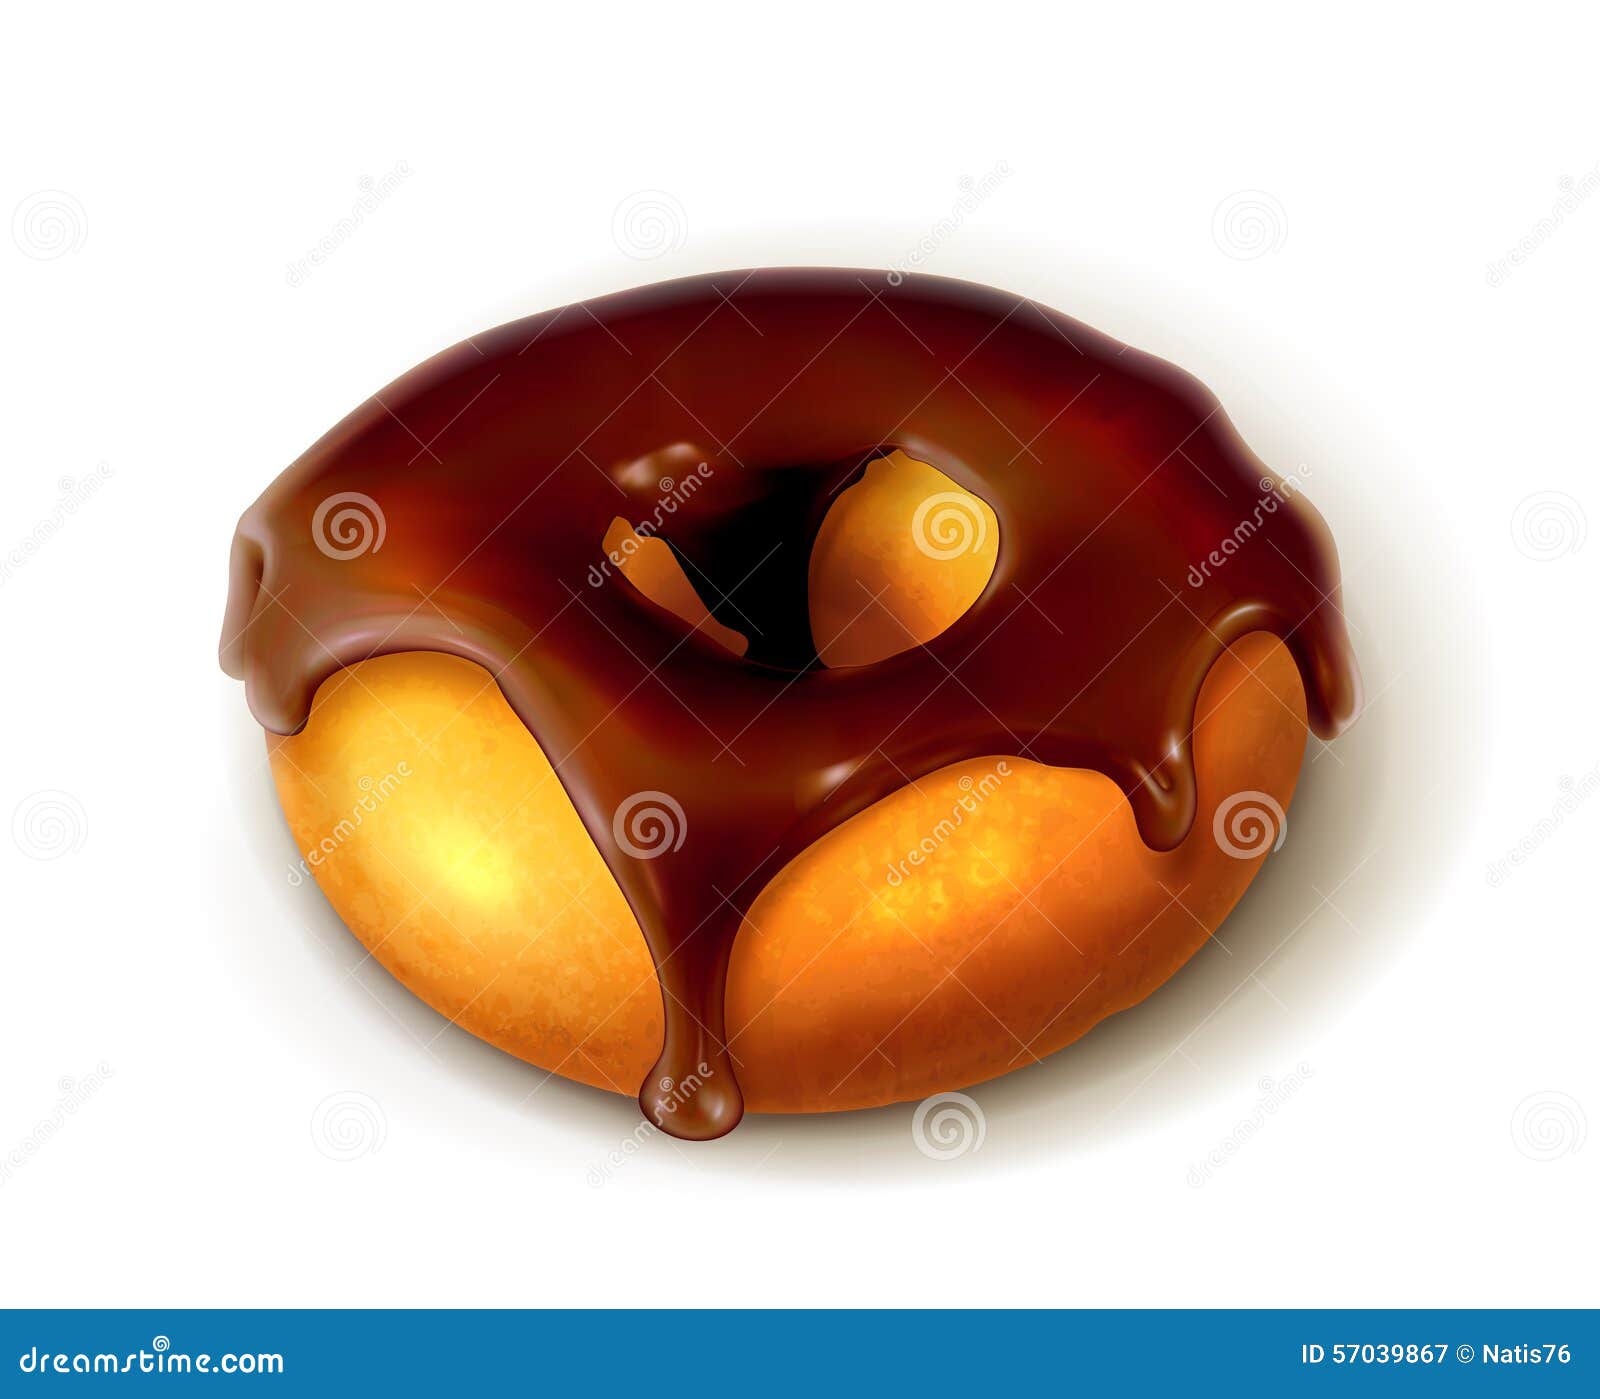 ring donut in chocolate glaze